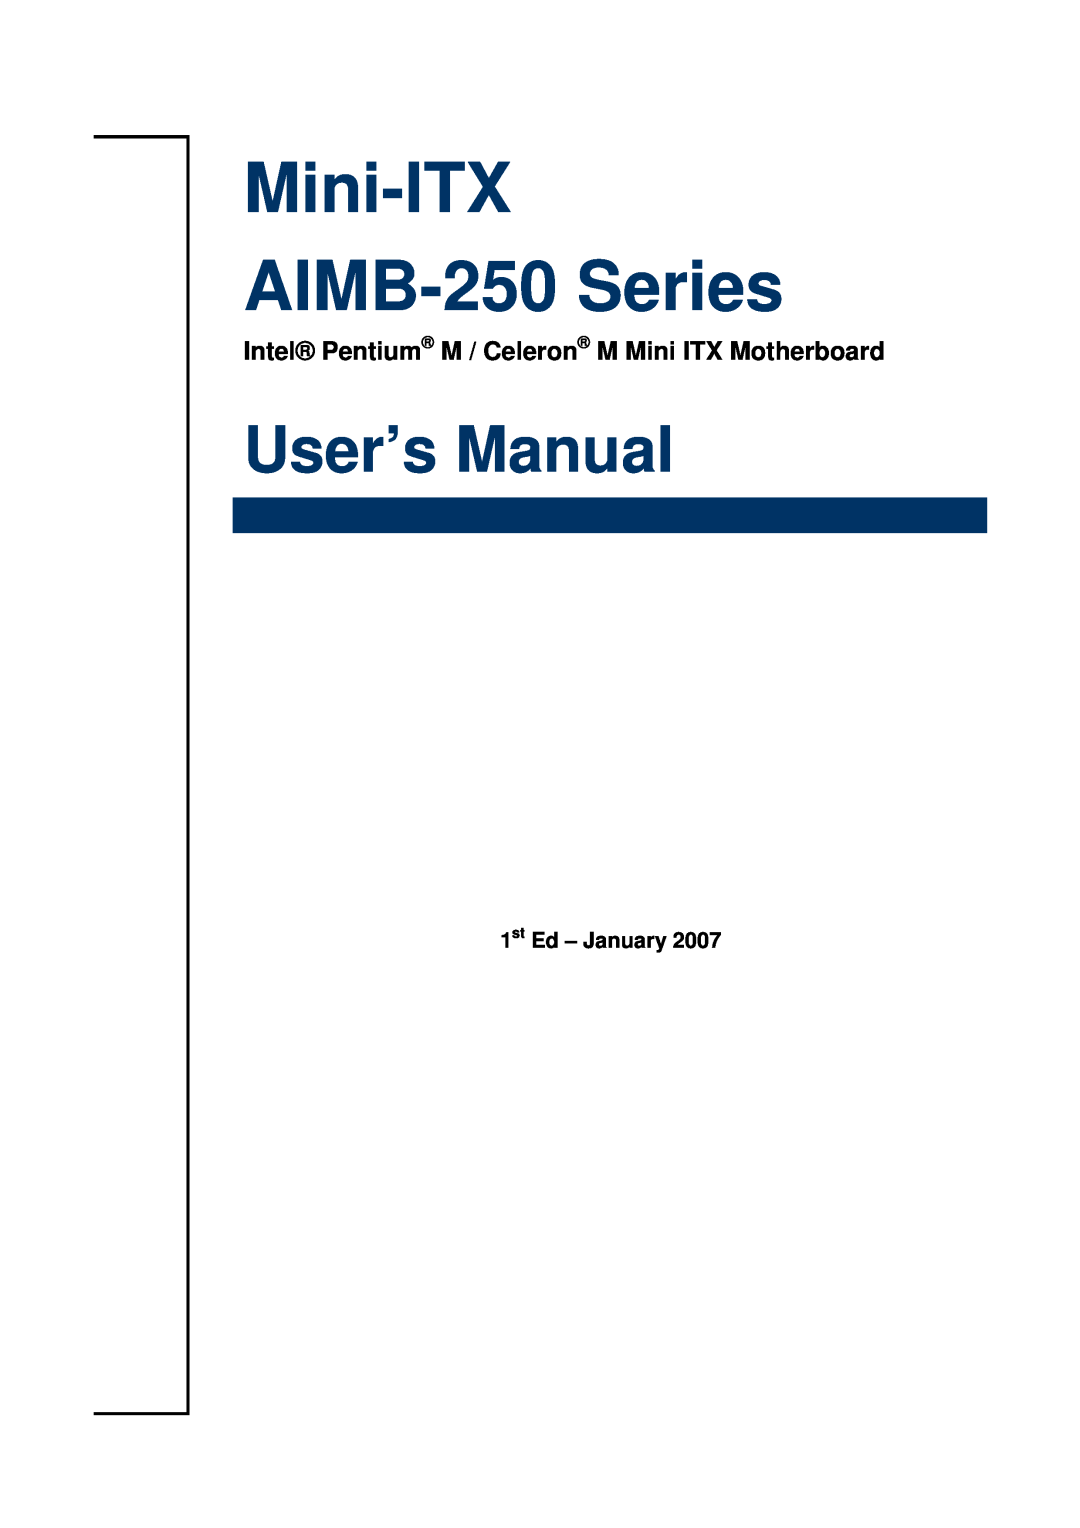 Advantech user manual Mini-ITX AIMB-250 Series, 1st Ed - January, User’s Manual 